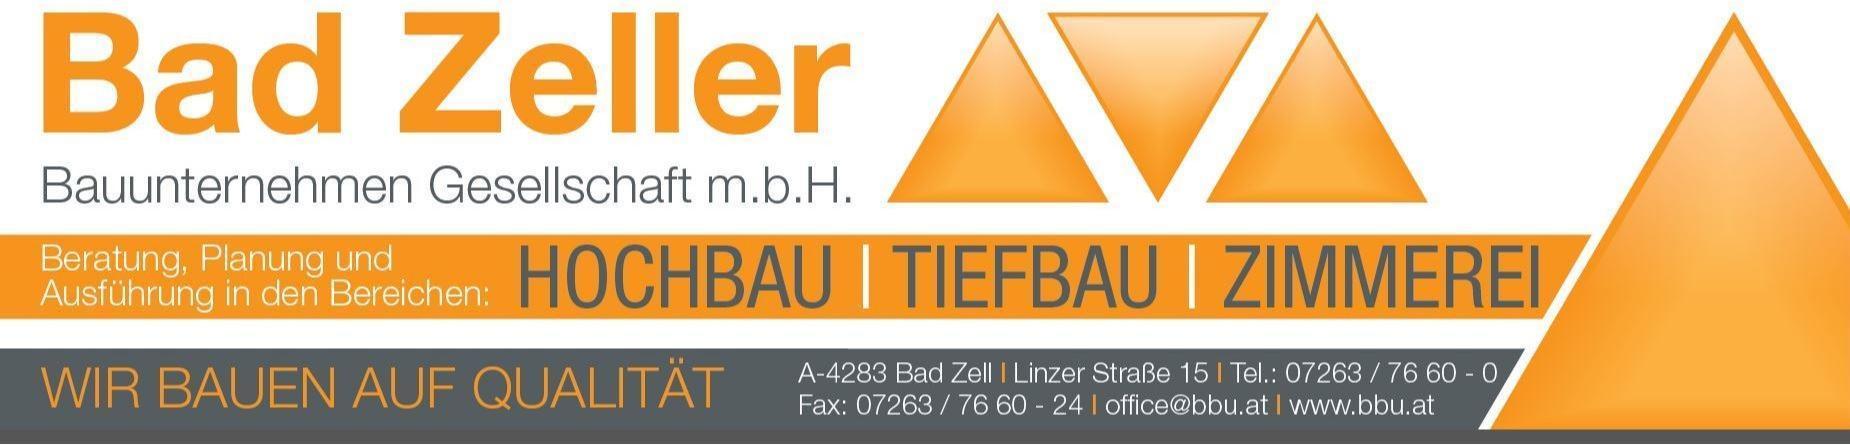 Logo Bad Zeller Bauunternehmen Gesellschaft mbH